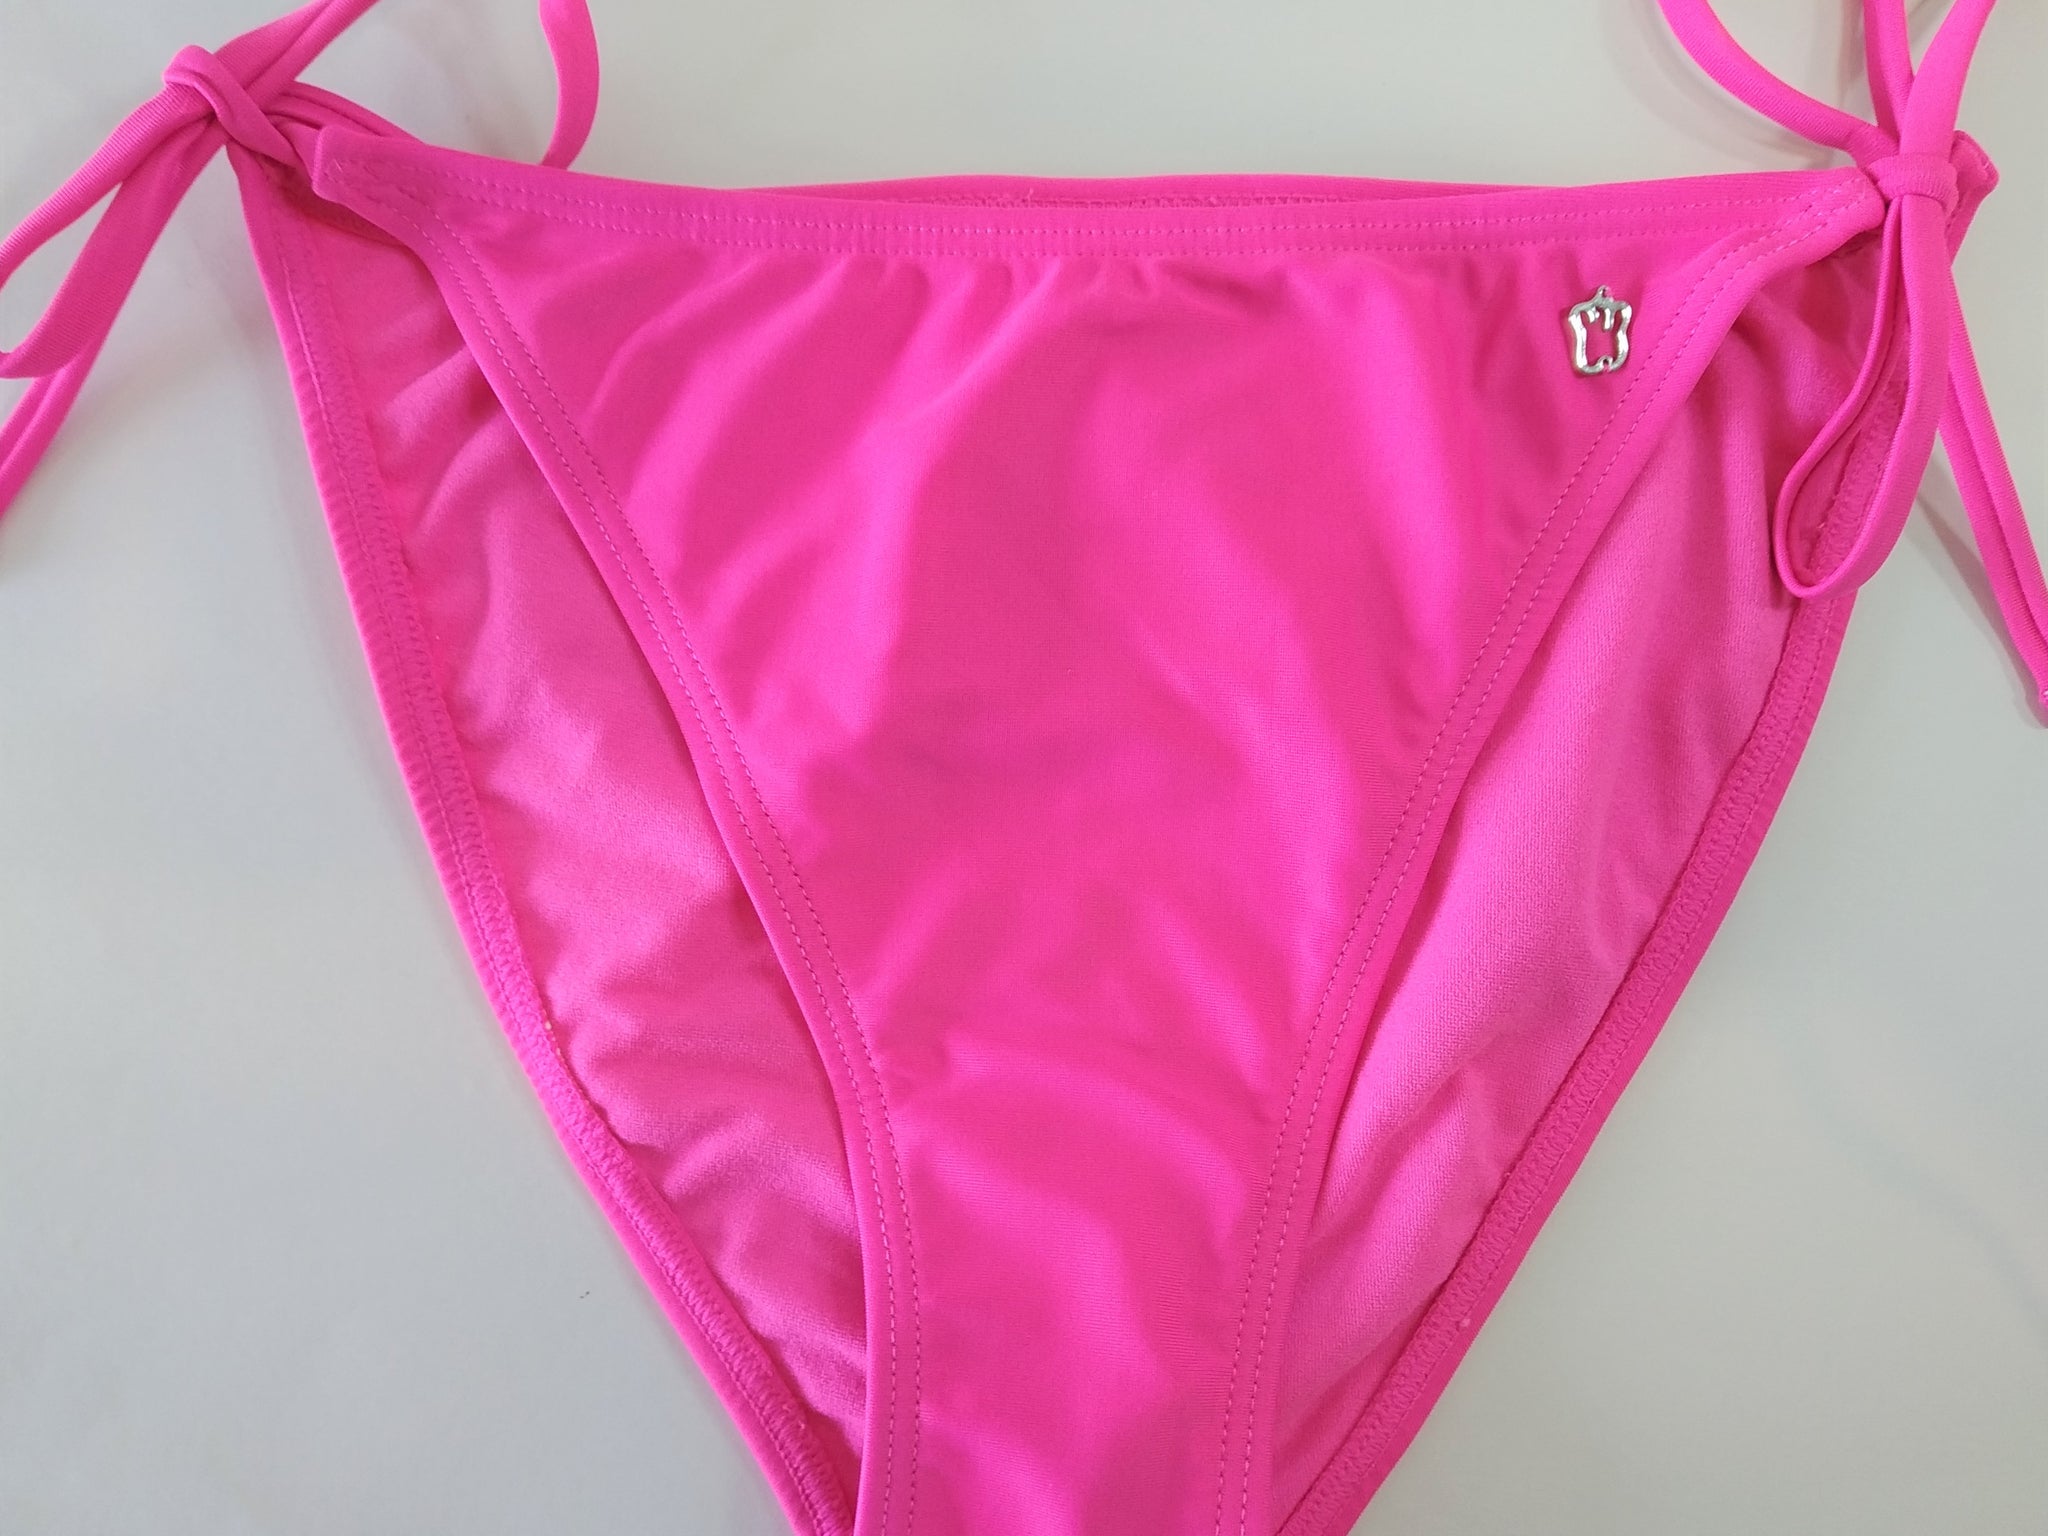 side tie bikini bottom,hot pink swimsuit bottom,culotte maillot de bain deux pieces rose fushia nouee cotes,bikini braga a nudo rosa